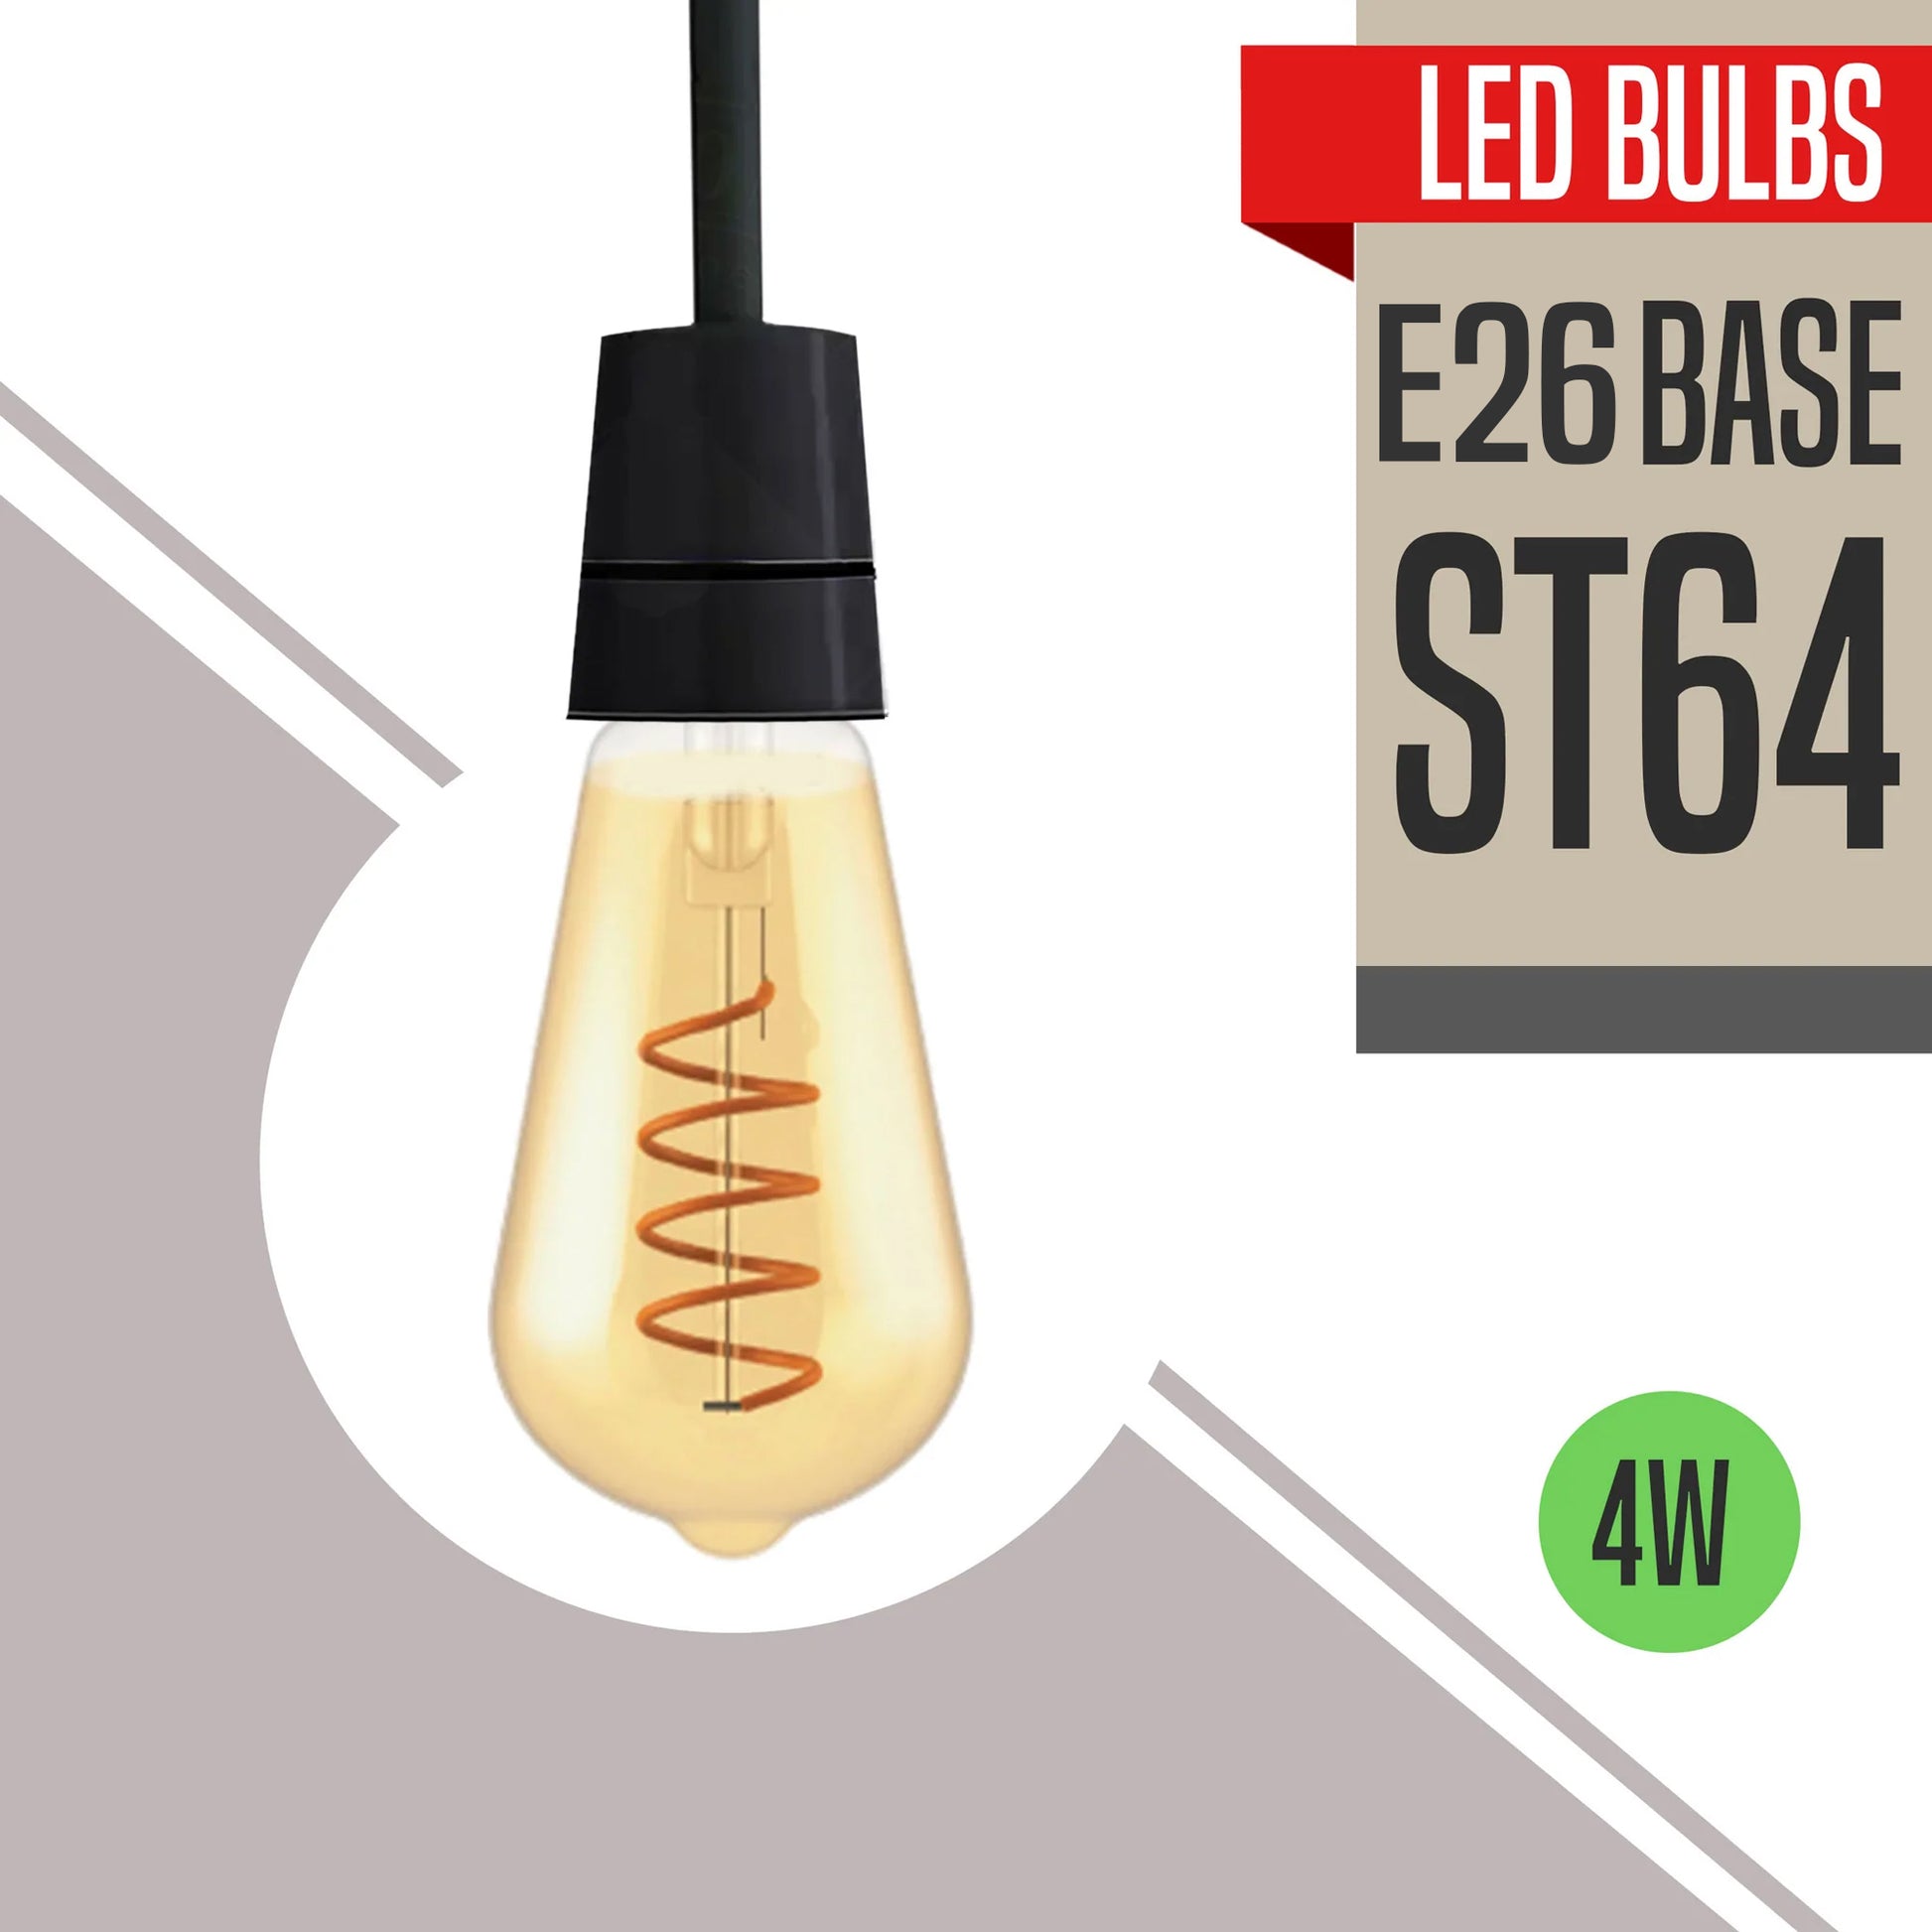 ST64 4W LED Light Bulb Warm White Vintage Edison Filament Bulbs Dimmable